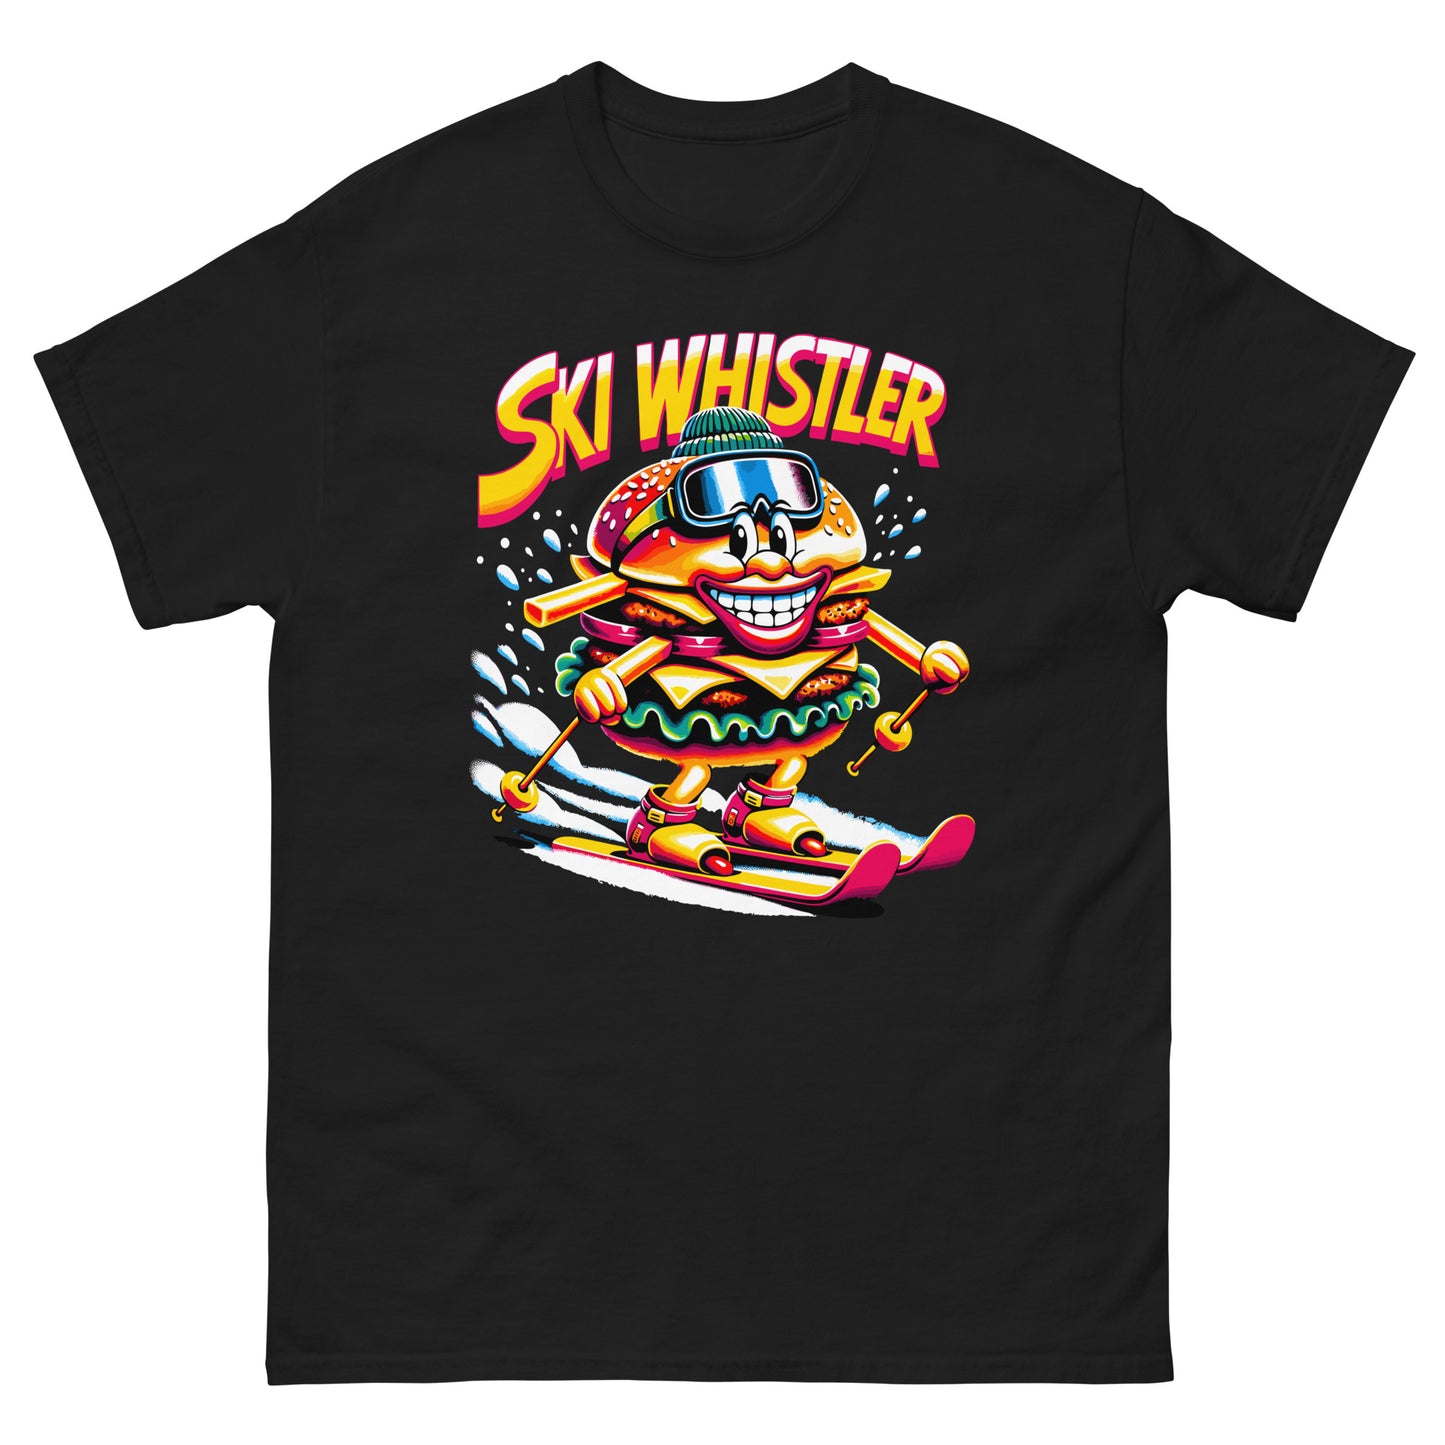 Ski Whistler Hamburger Man printed by Whistler Shirts